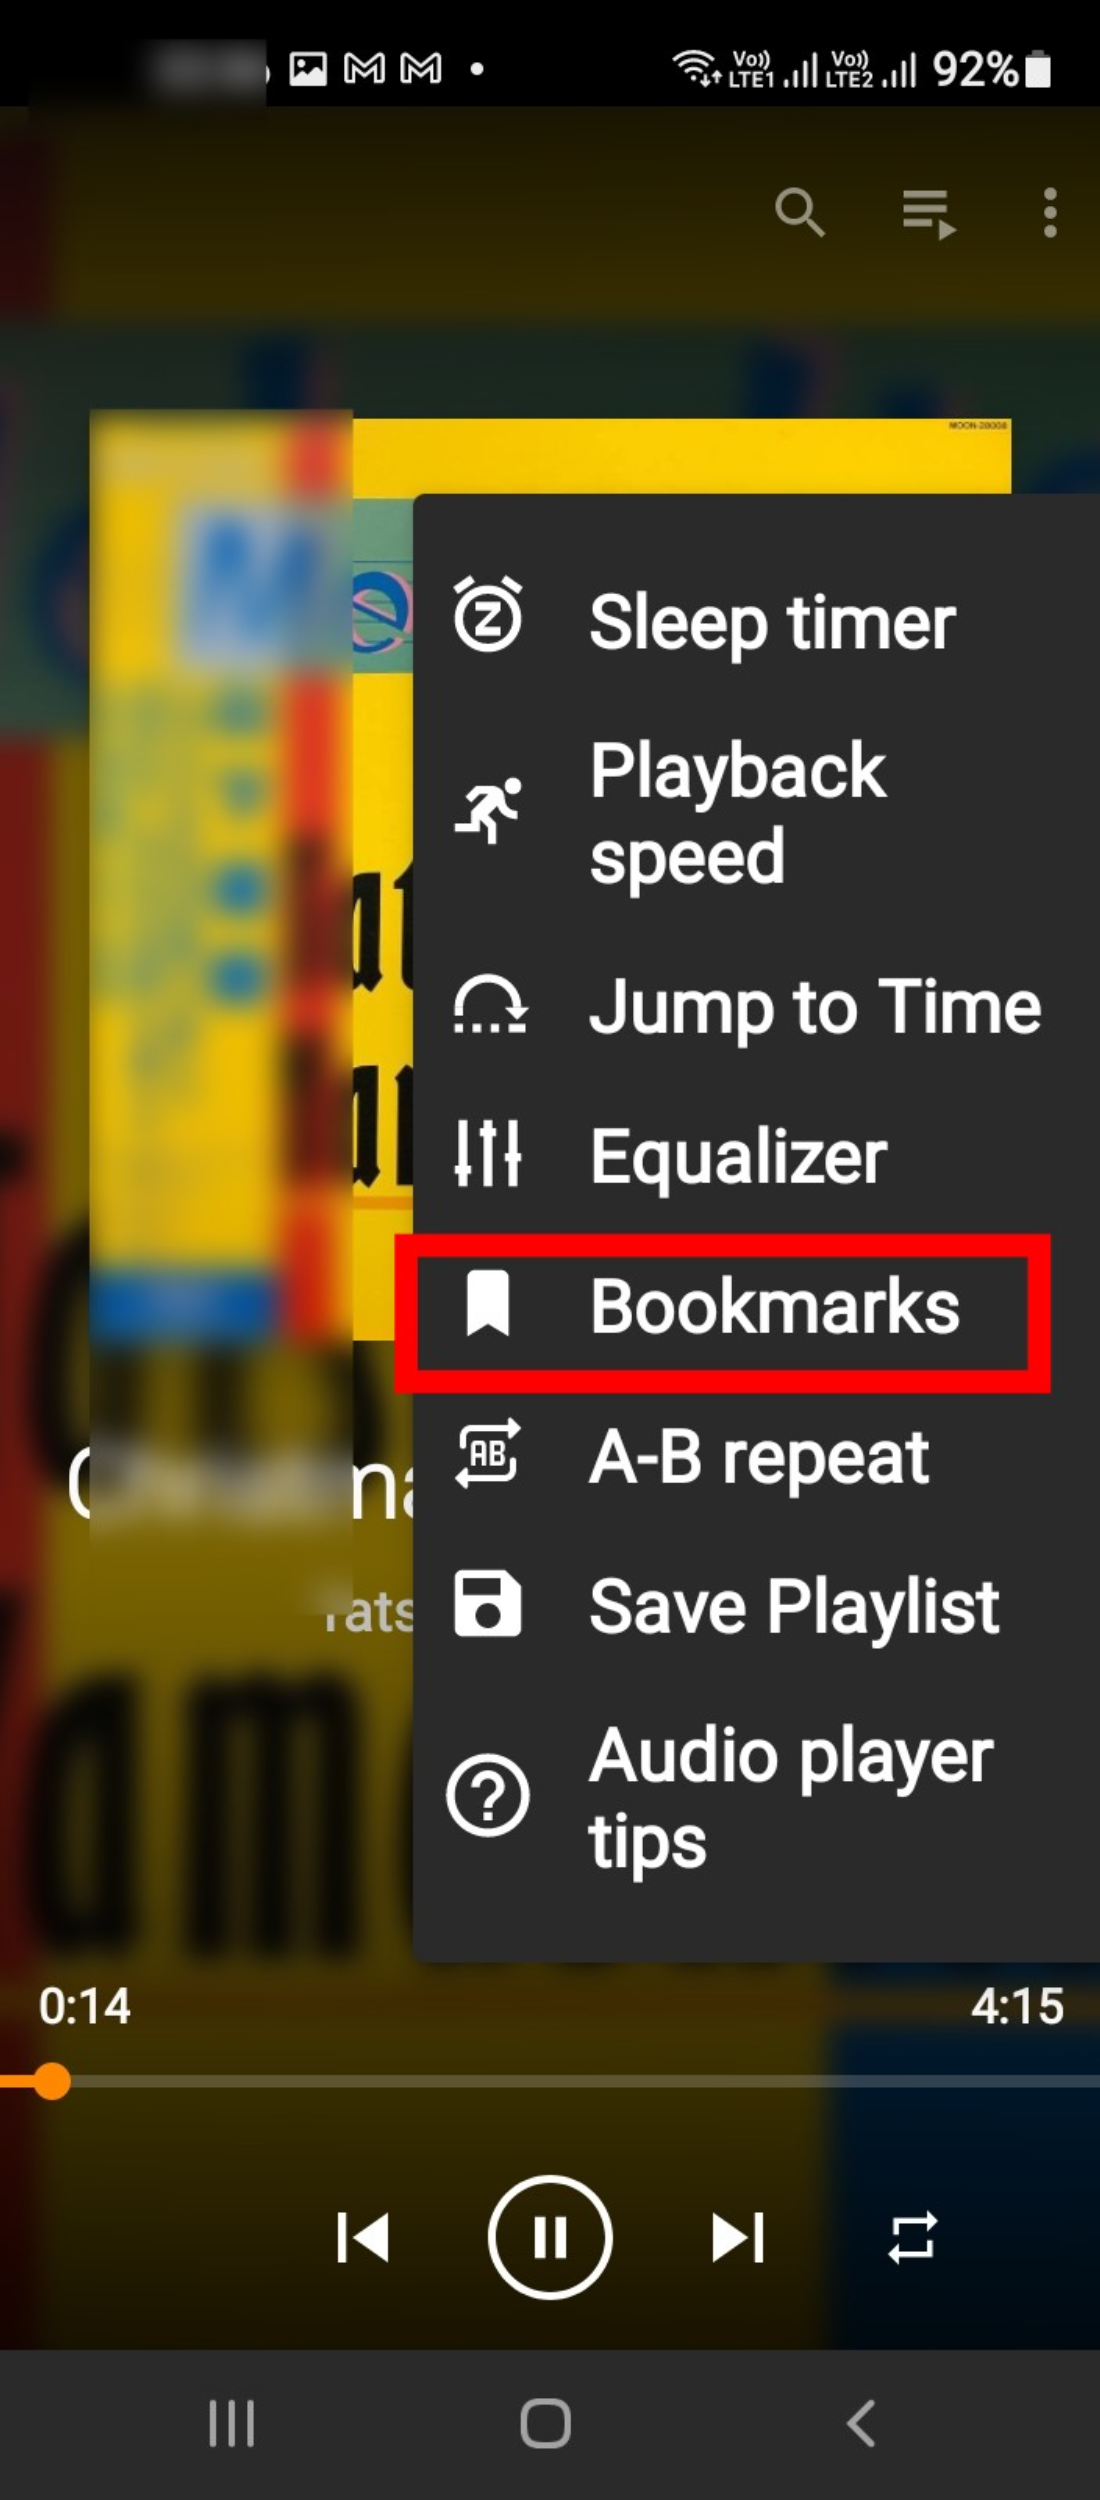 Bookmark dashboard in VLC media player